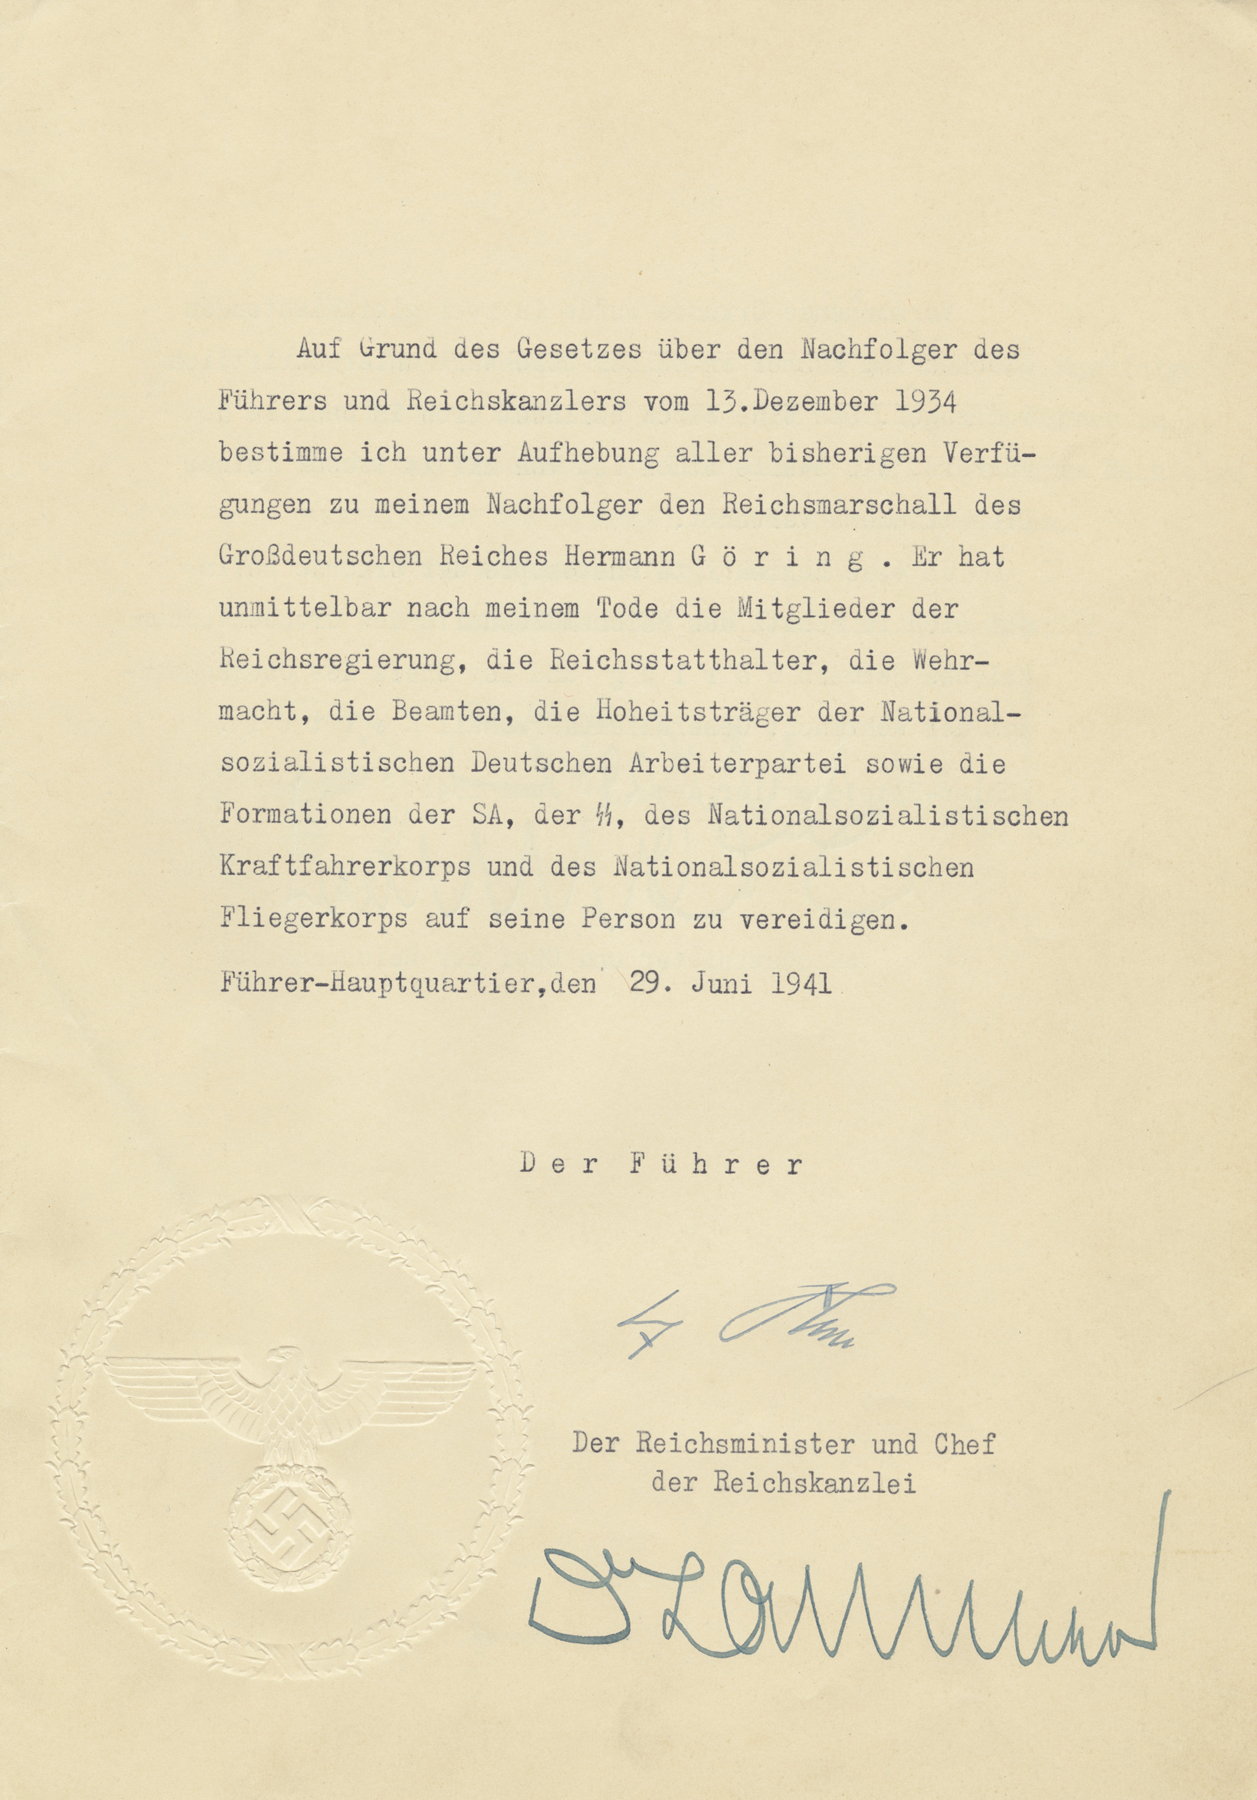 Adolf Hitler names Hermann Göring as his successor in case of his death